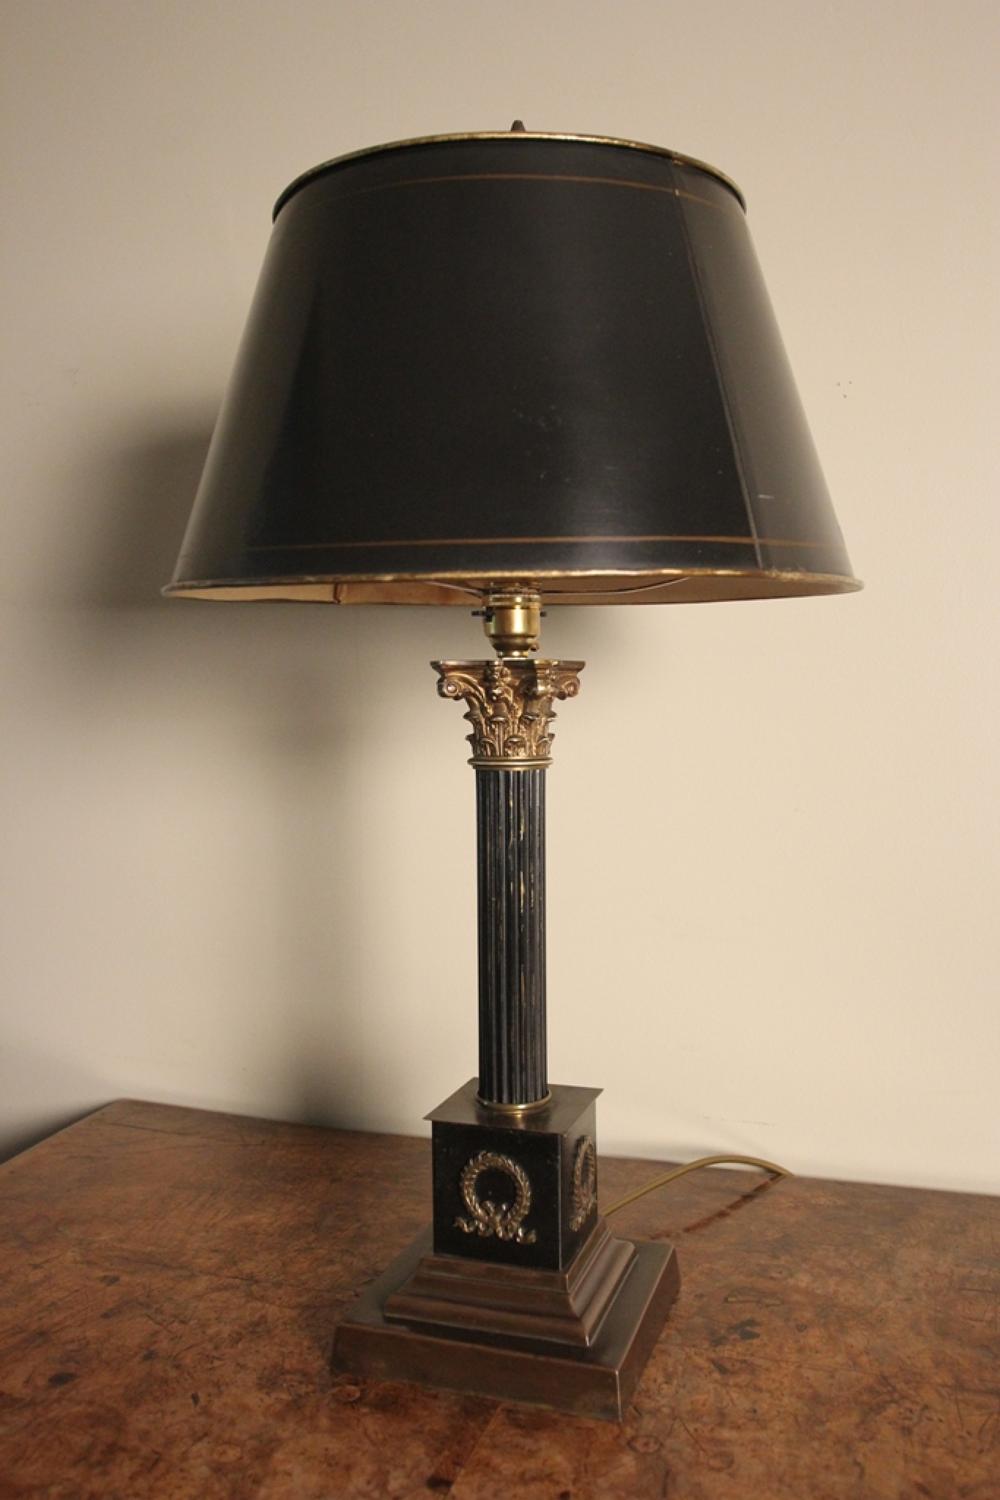 Edwardian Corinthian Lamp Base with Original Shade